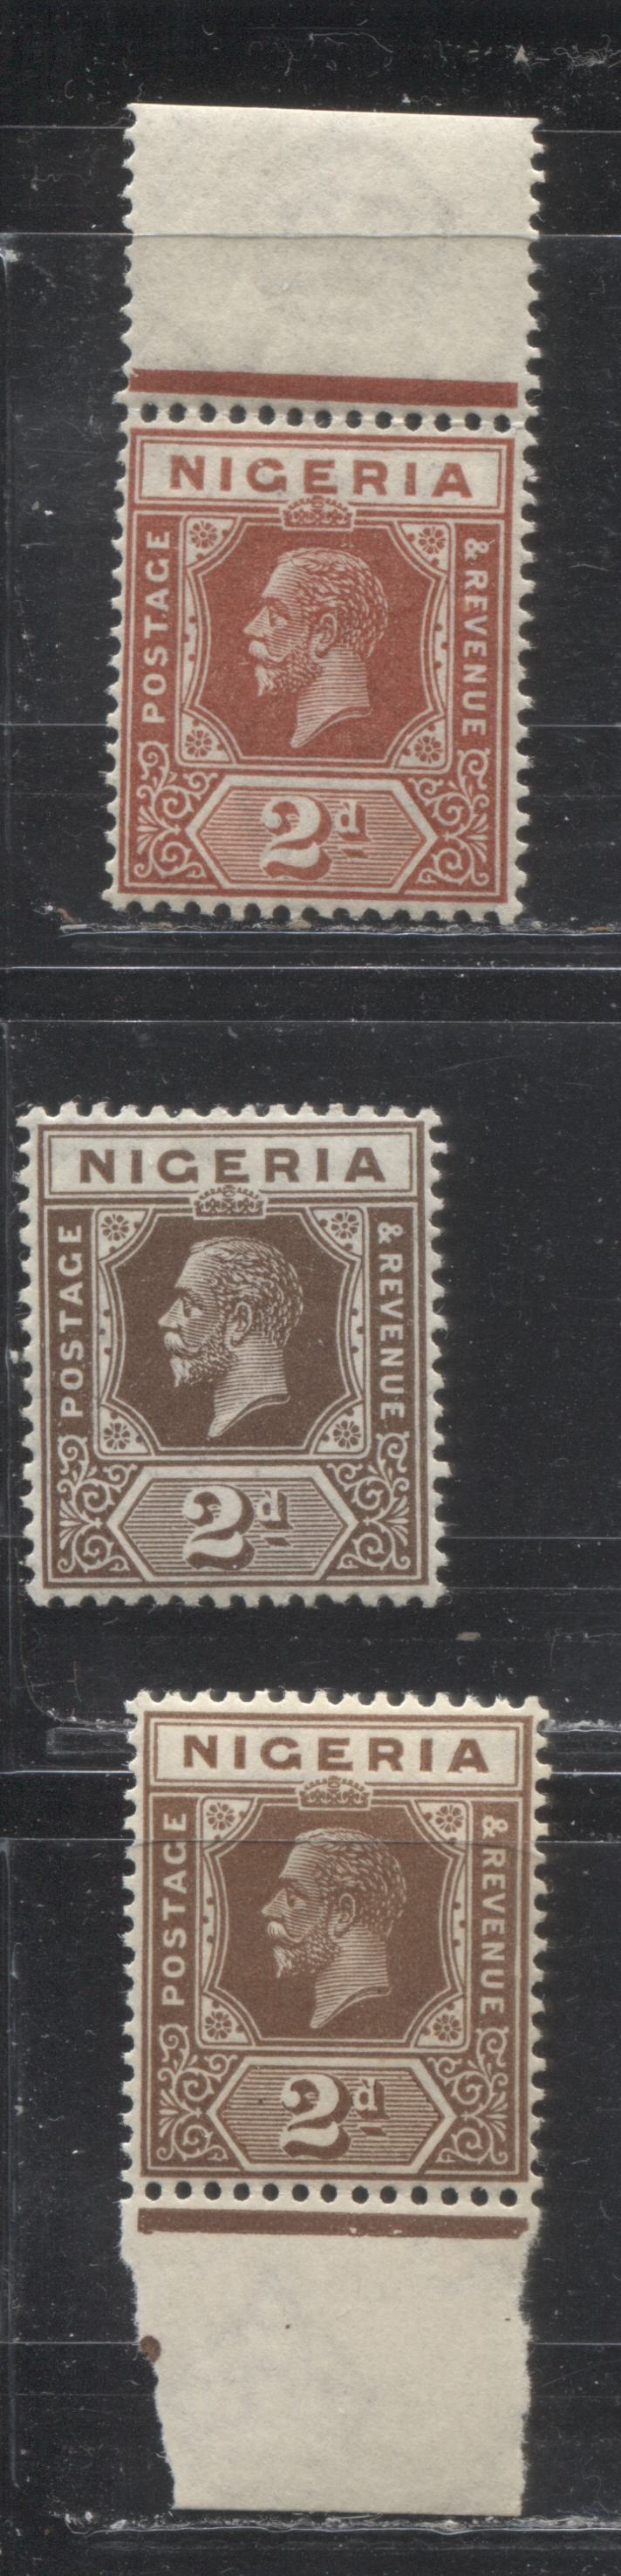 Lot 239 Nigeria SG# 19-20 2d Chestnut, Brown and Dark Brown King George V, 1921-1932 Multiple Script CA Imperium Keyplate Issue, Three VFNH Examples, Die 2